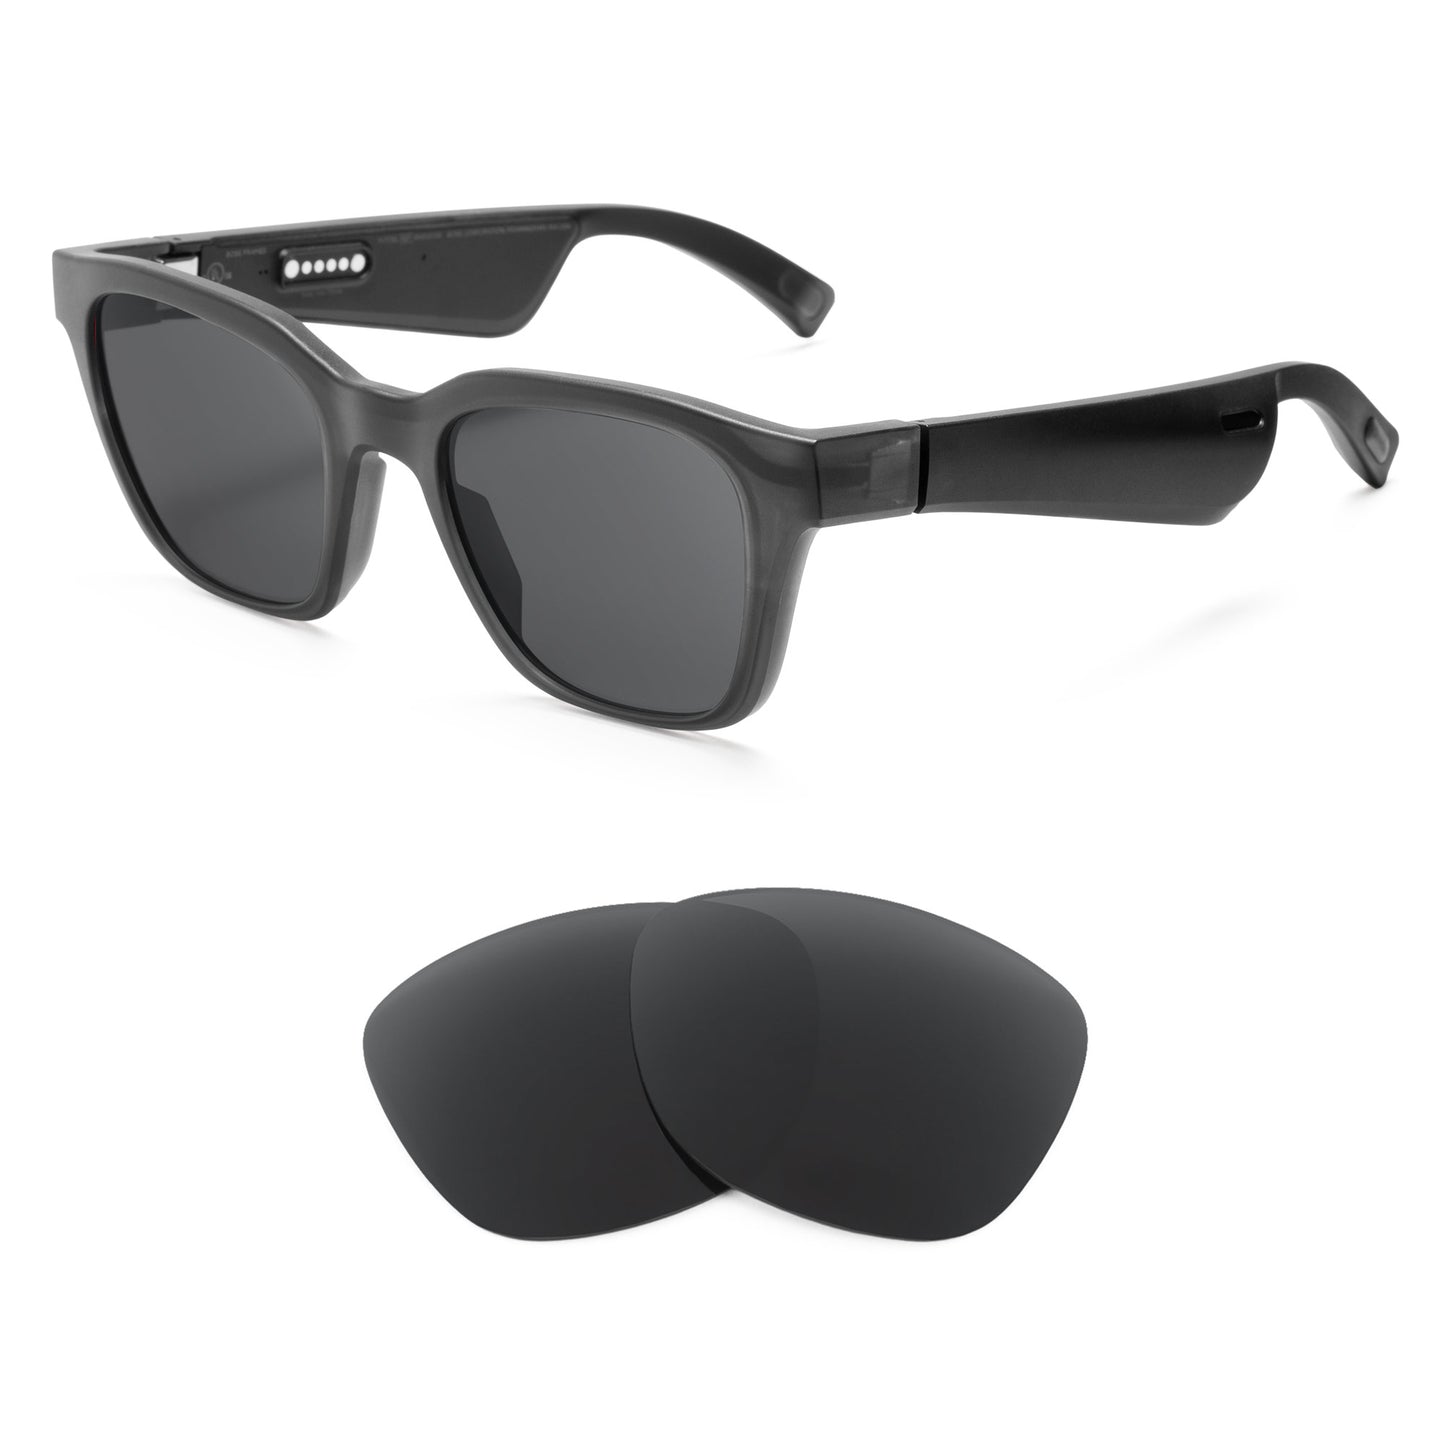 Bose Alto M/L sunglasses with replacement lenses